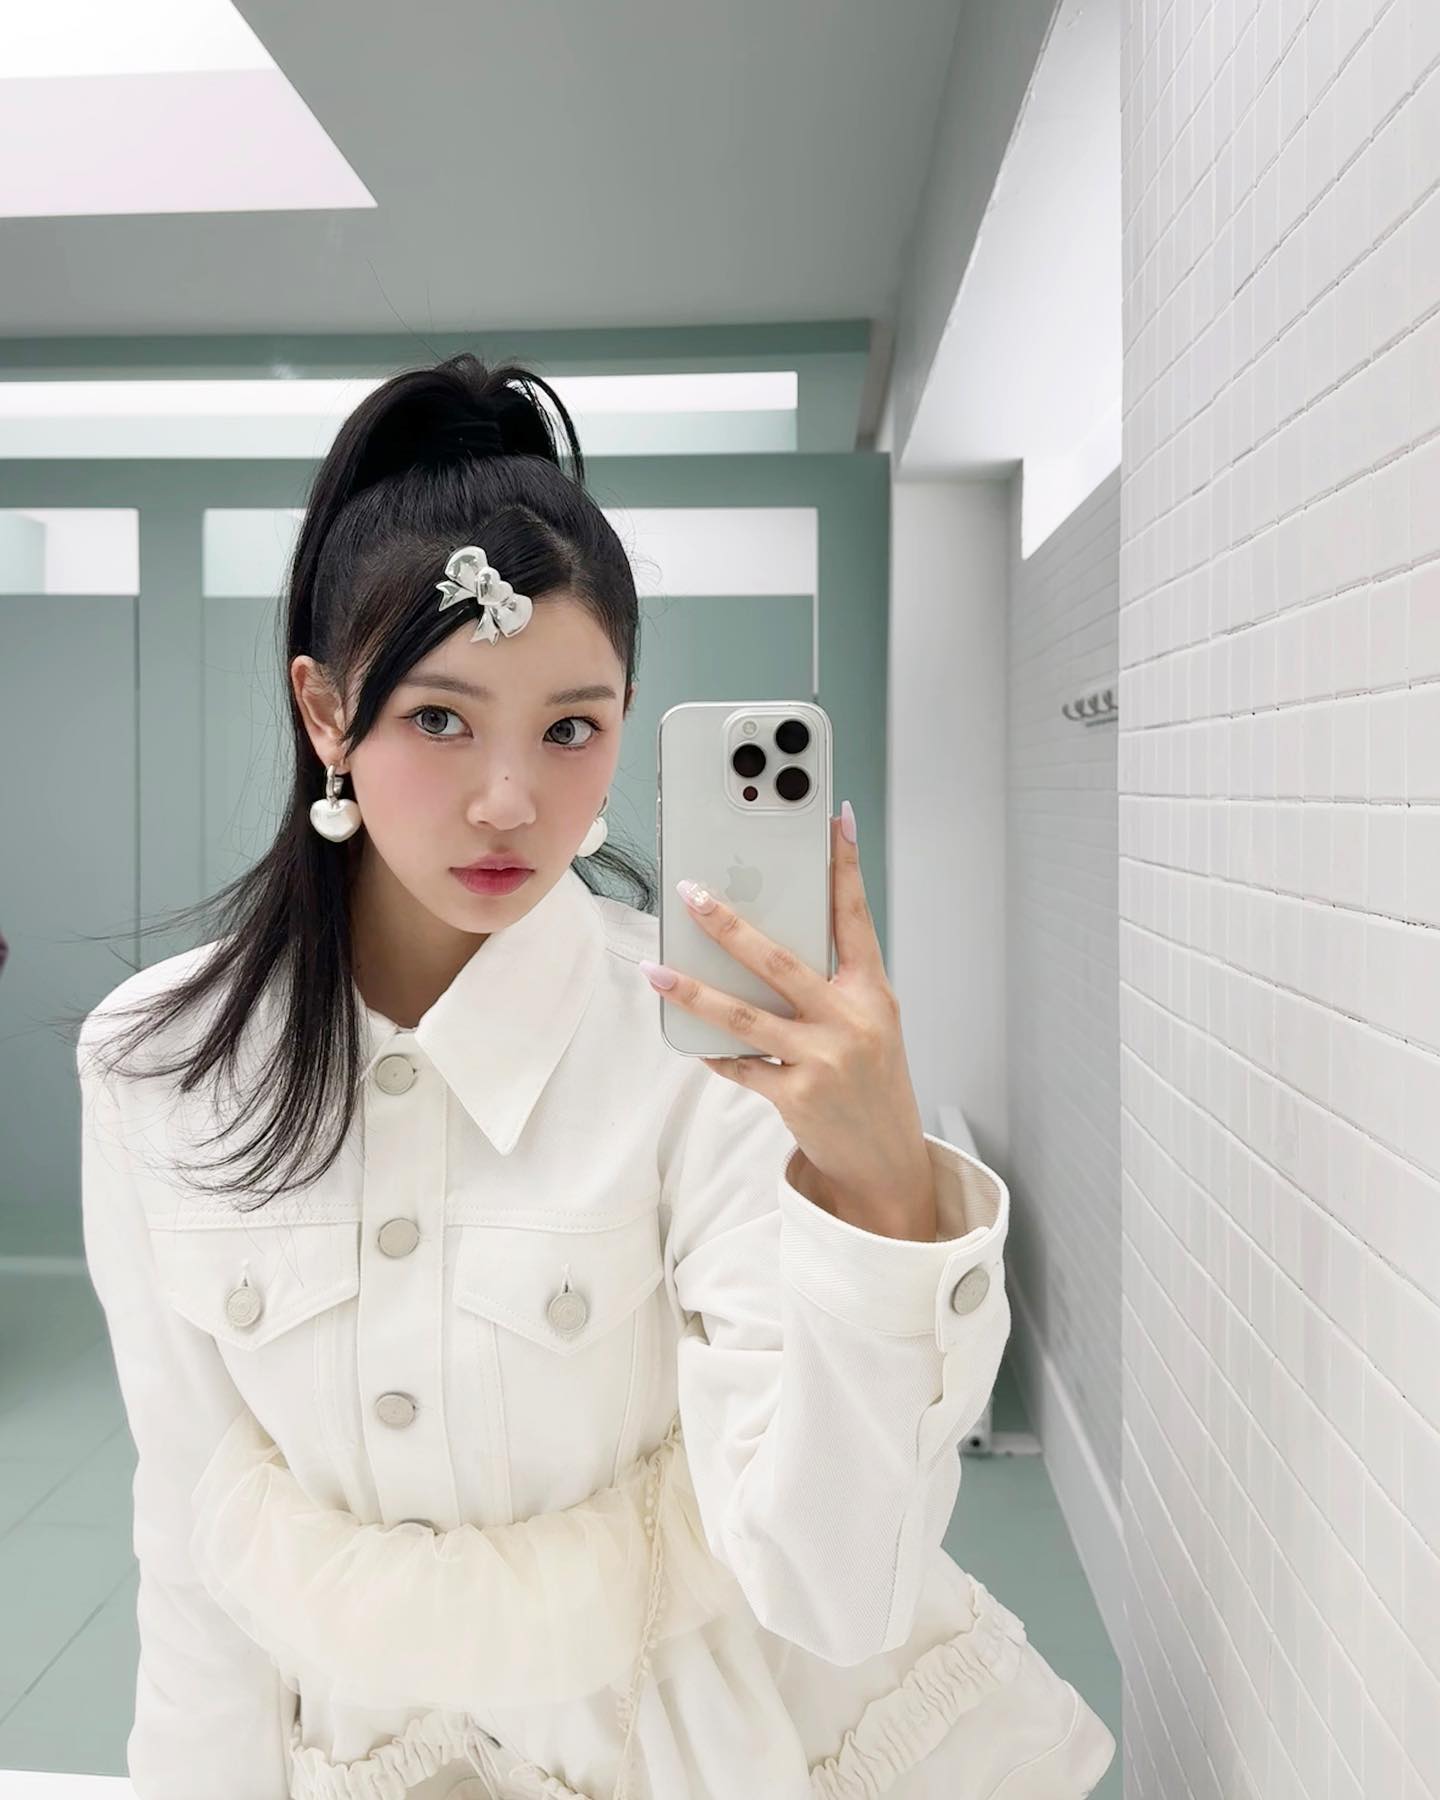 Meet ILLIT's Moka, the Japanese K-Pop Star: Age, Debut Details | J-14